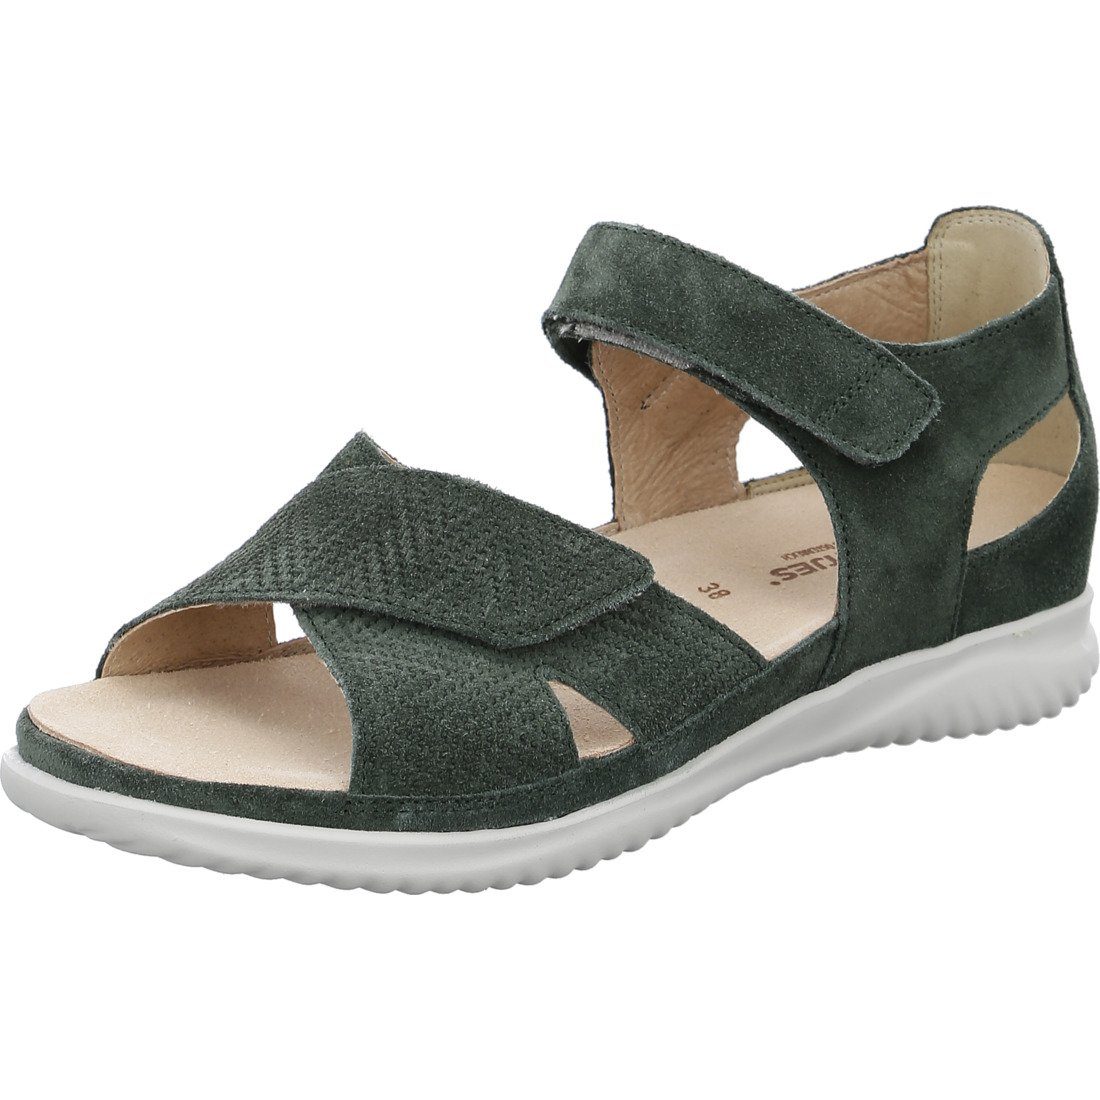 Hartjes Hartjes Schuhe, Sandalette grün 048736 Breeze - Sandalette Velours